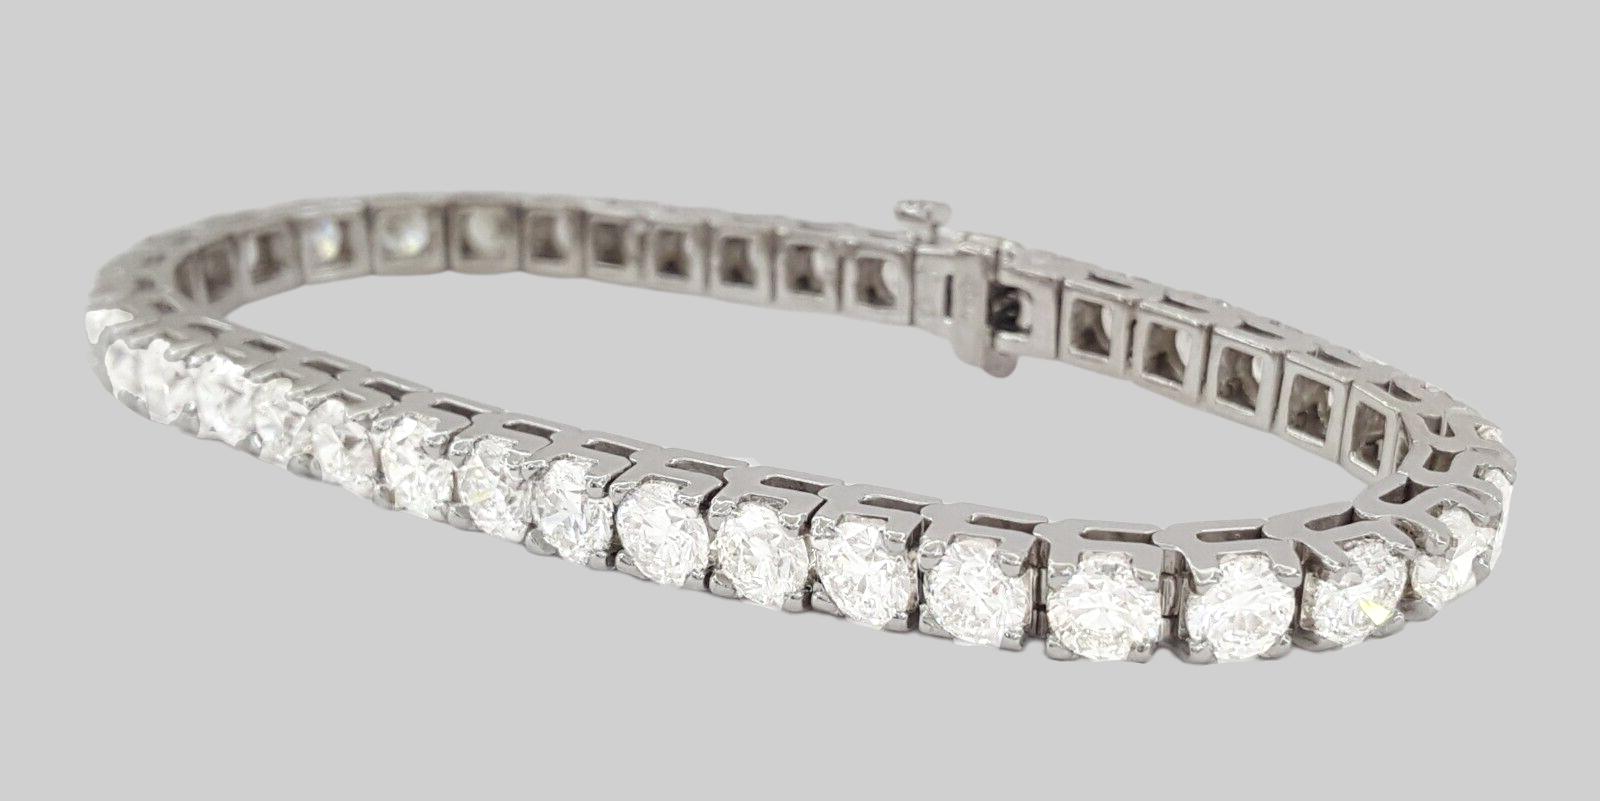 13 carat tennis bracelet